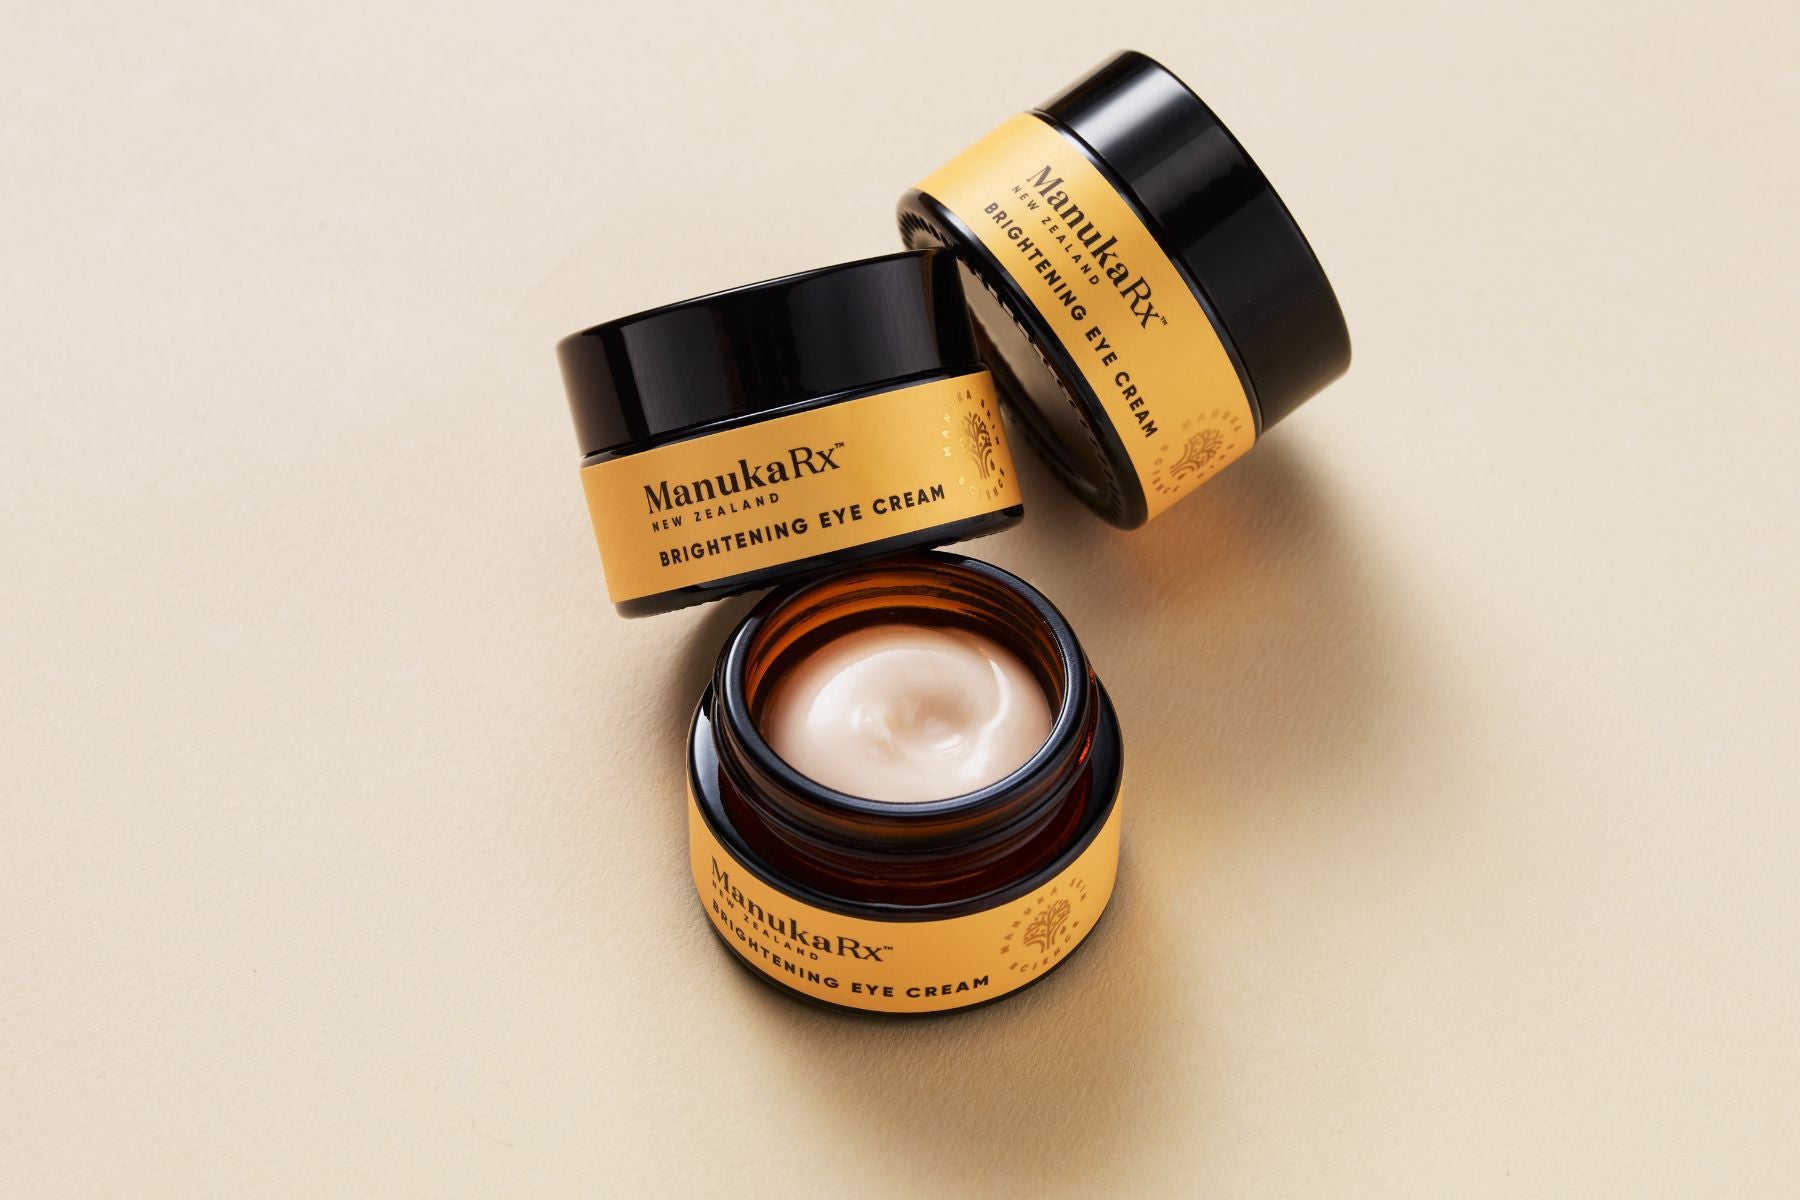 ManukaRx Brightening Eye Cream Product shot